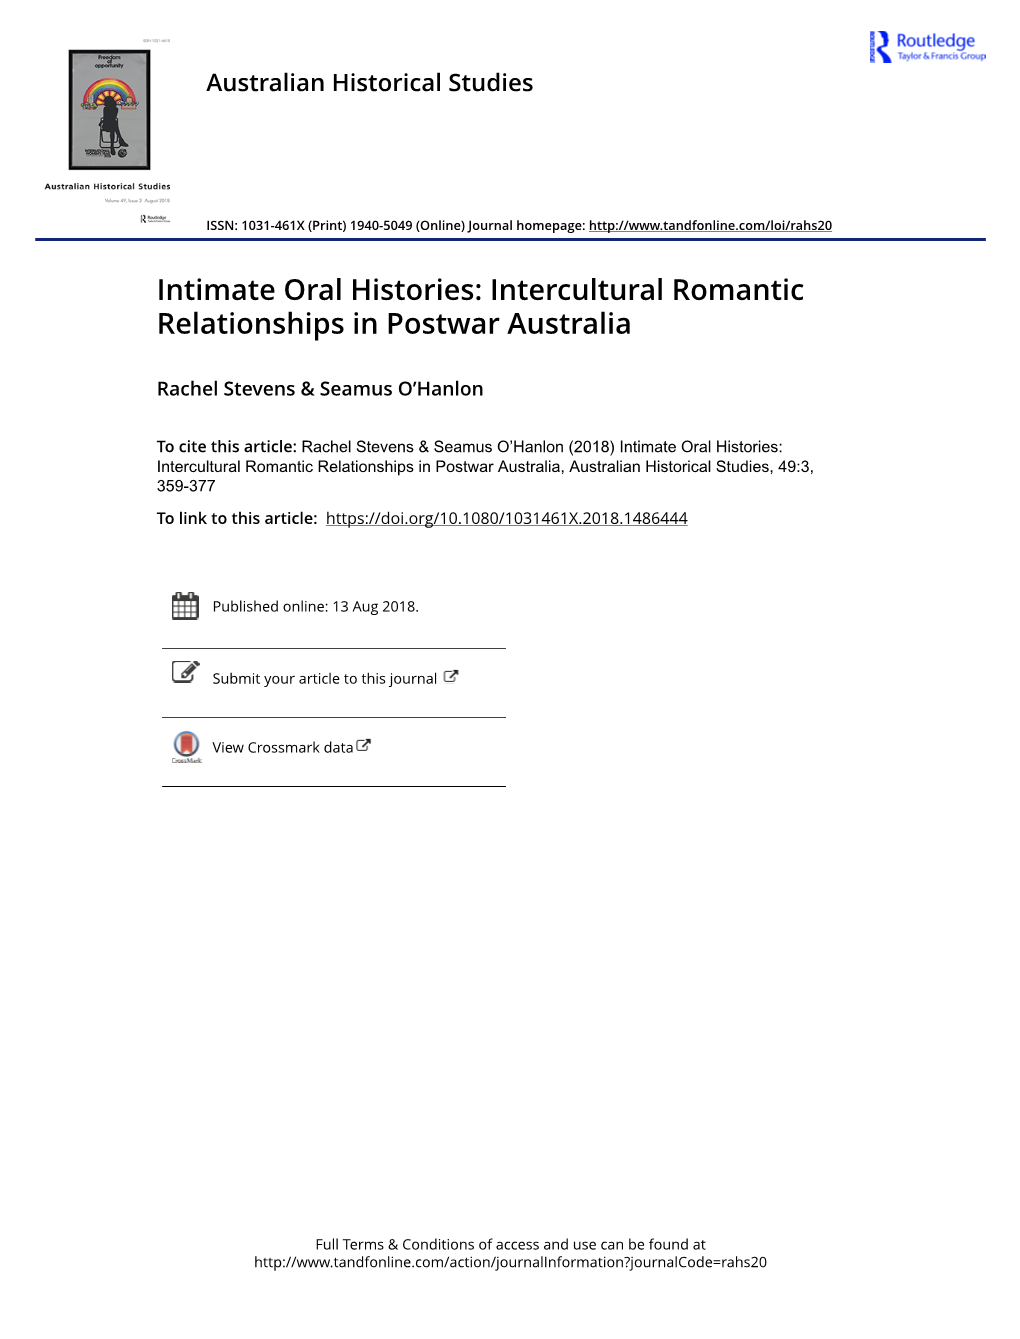 Intimate Oral Histories: Intercultural Romantic Relationships in Postwar Australia